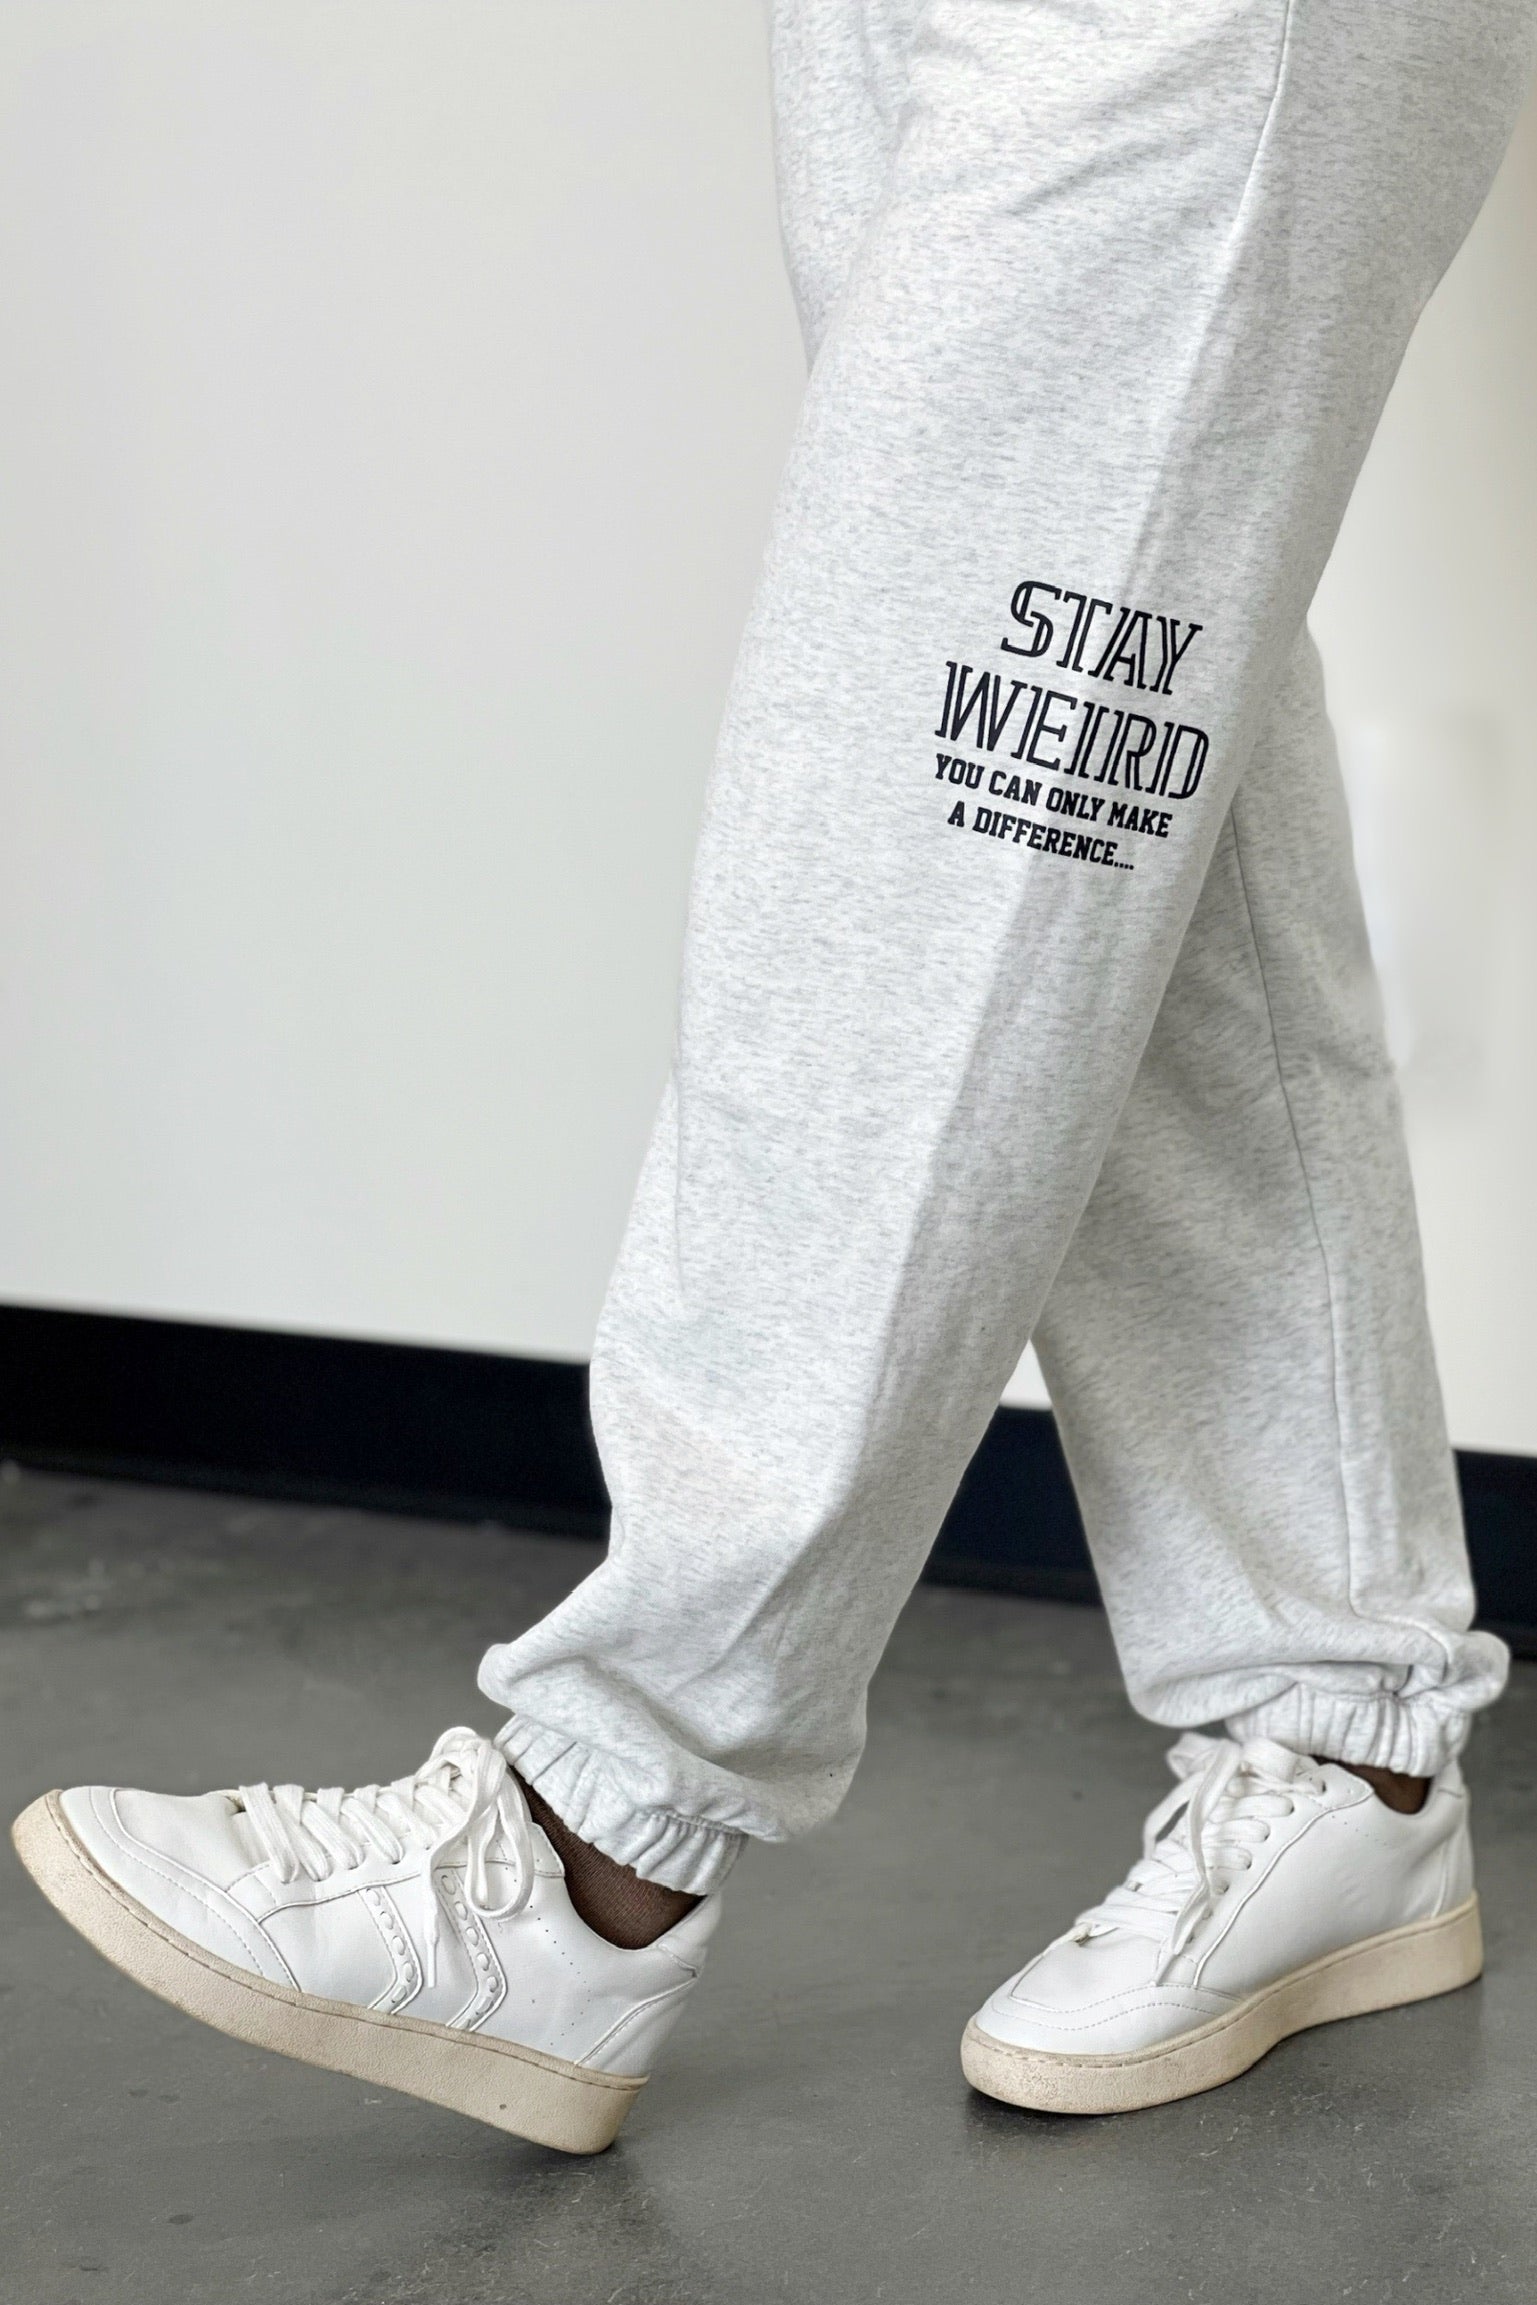 Stay Weird Sweatpants - FINAL SALE